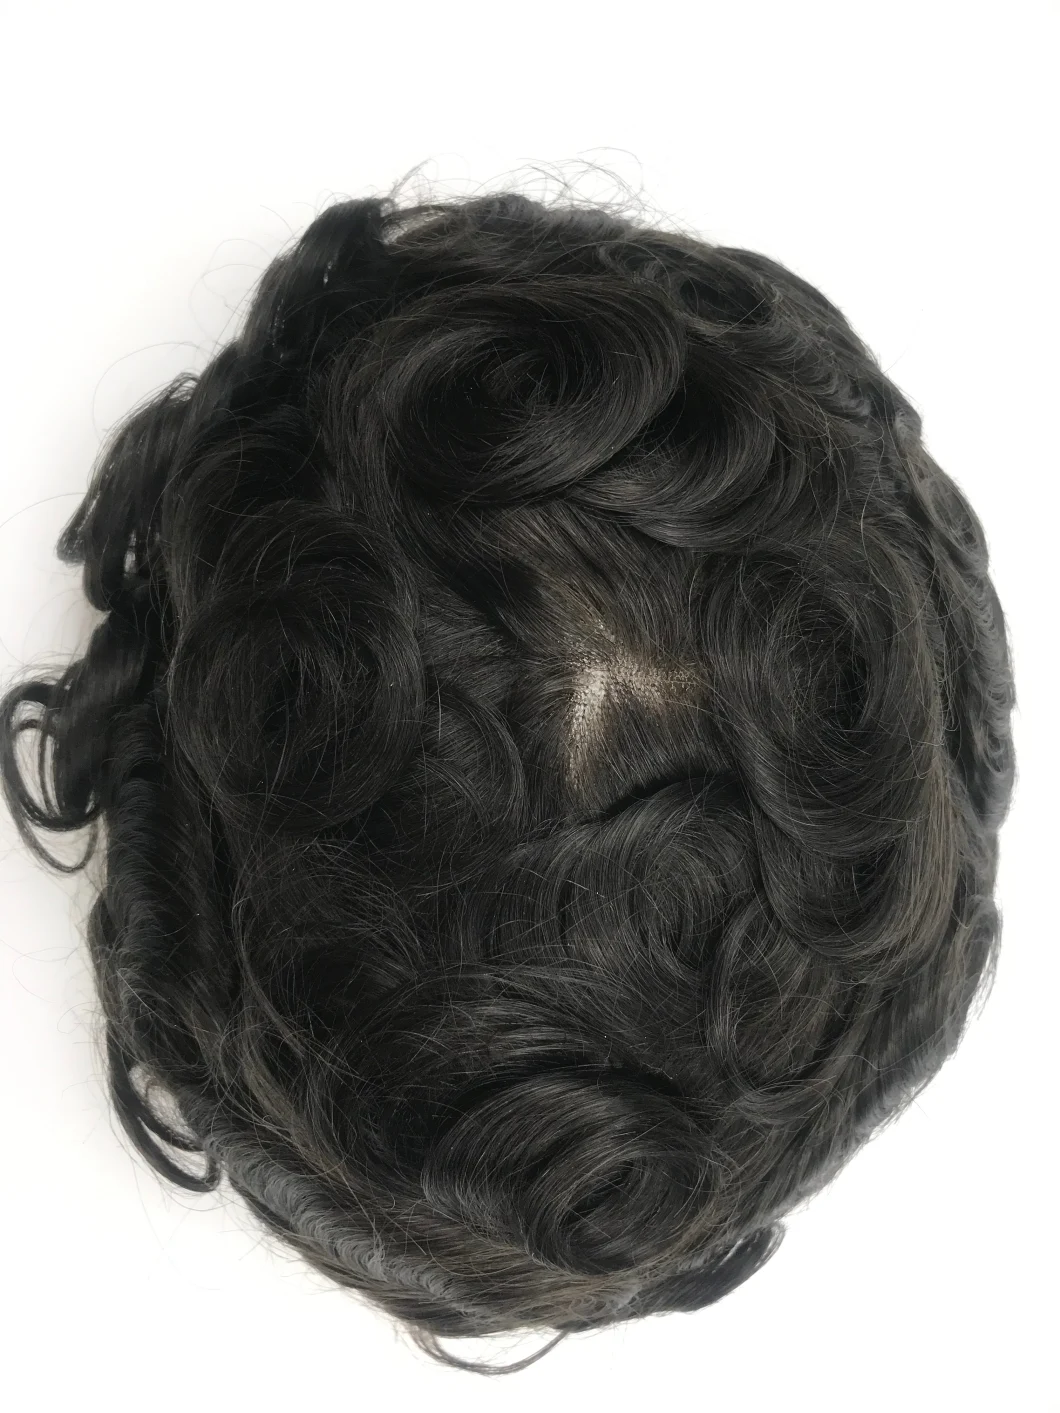 Human Hair Full Swiss Lace Men's Toupee, Natural Base Hair Prosthesis for Men